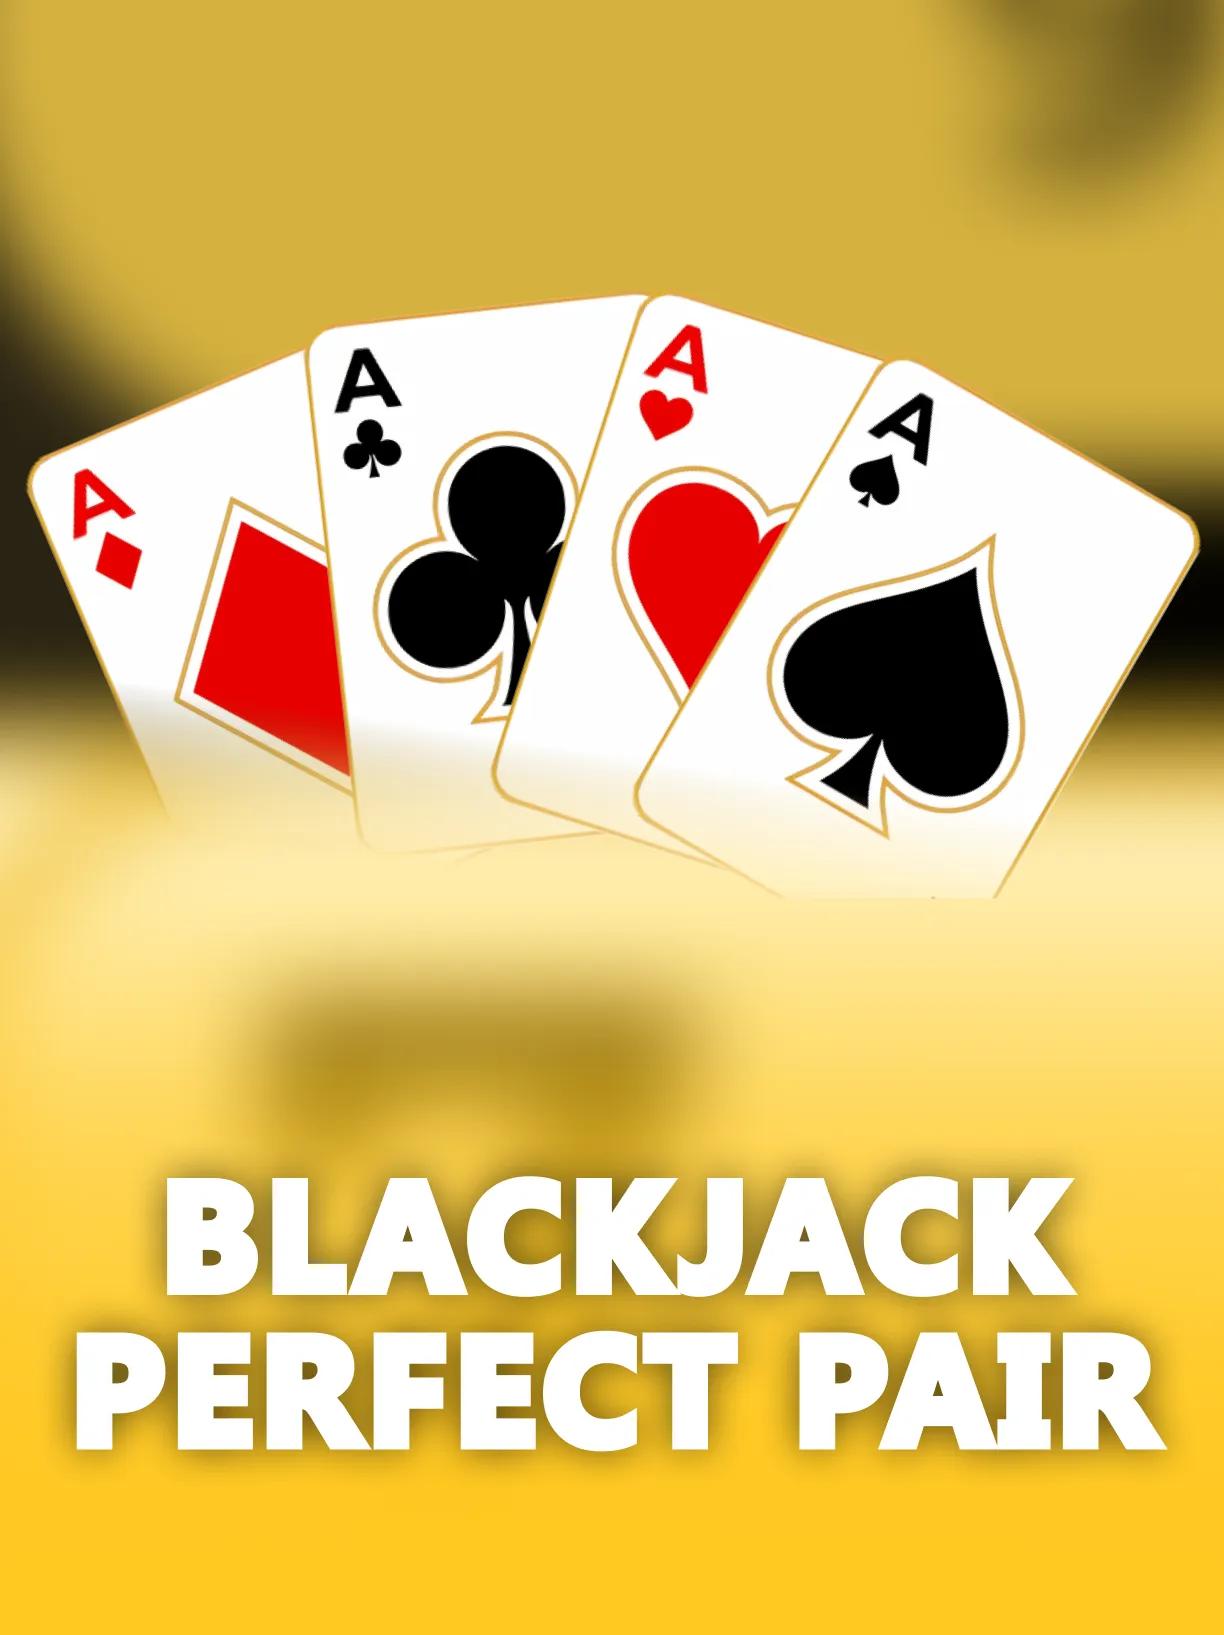 Blackjack Perfect Pairs And 21plus3